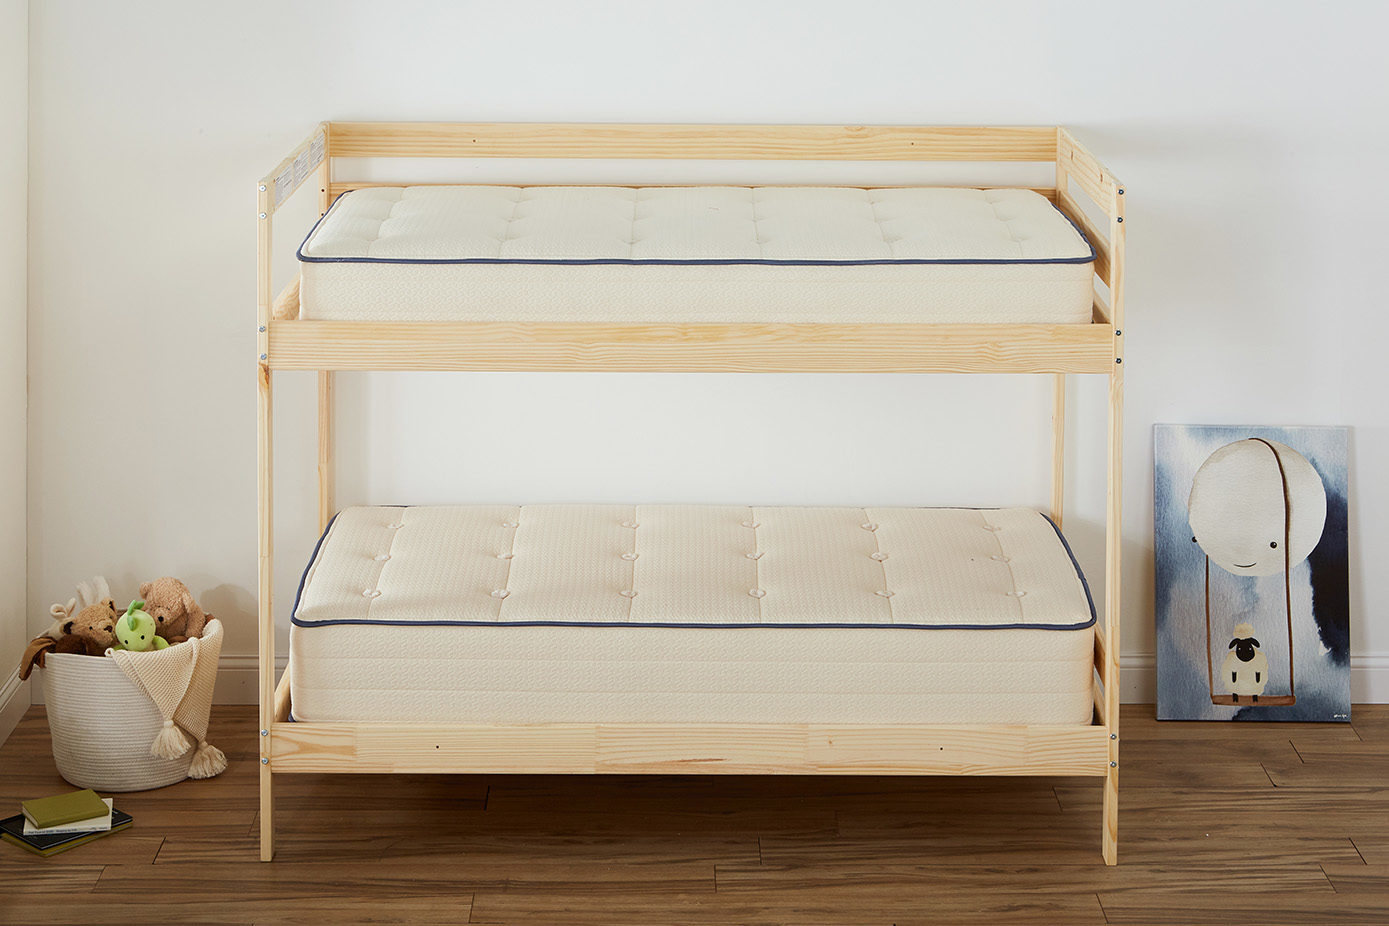 Kiwi Bunk Bed Mattresses, Wooden Bunk Beds With Mattresses